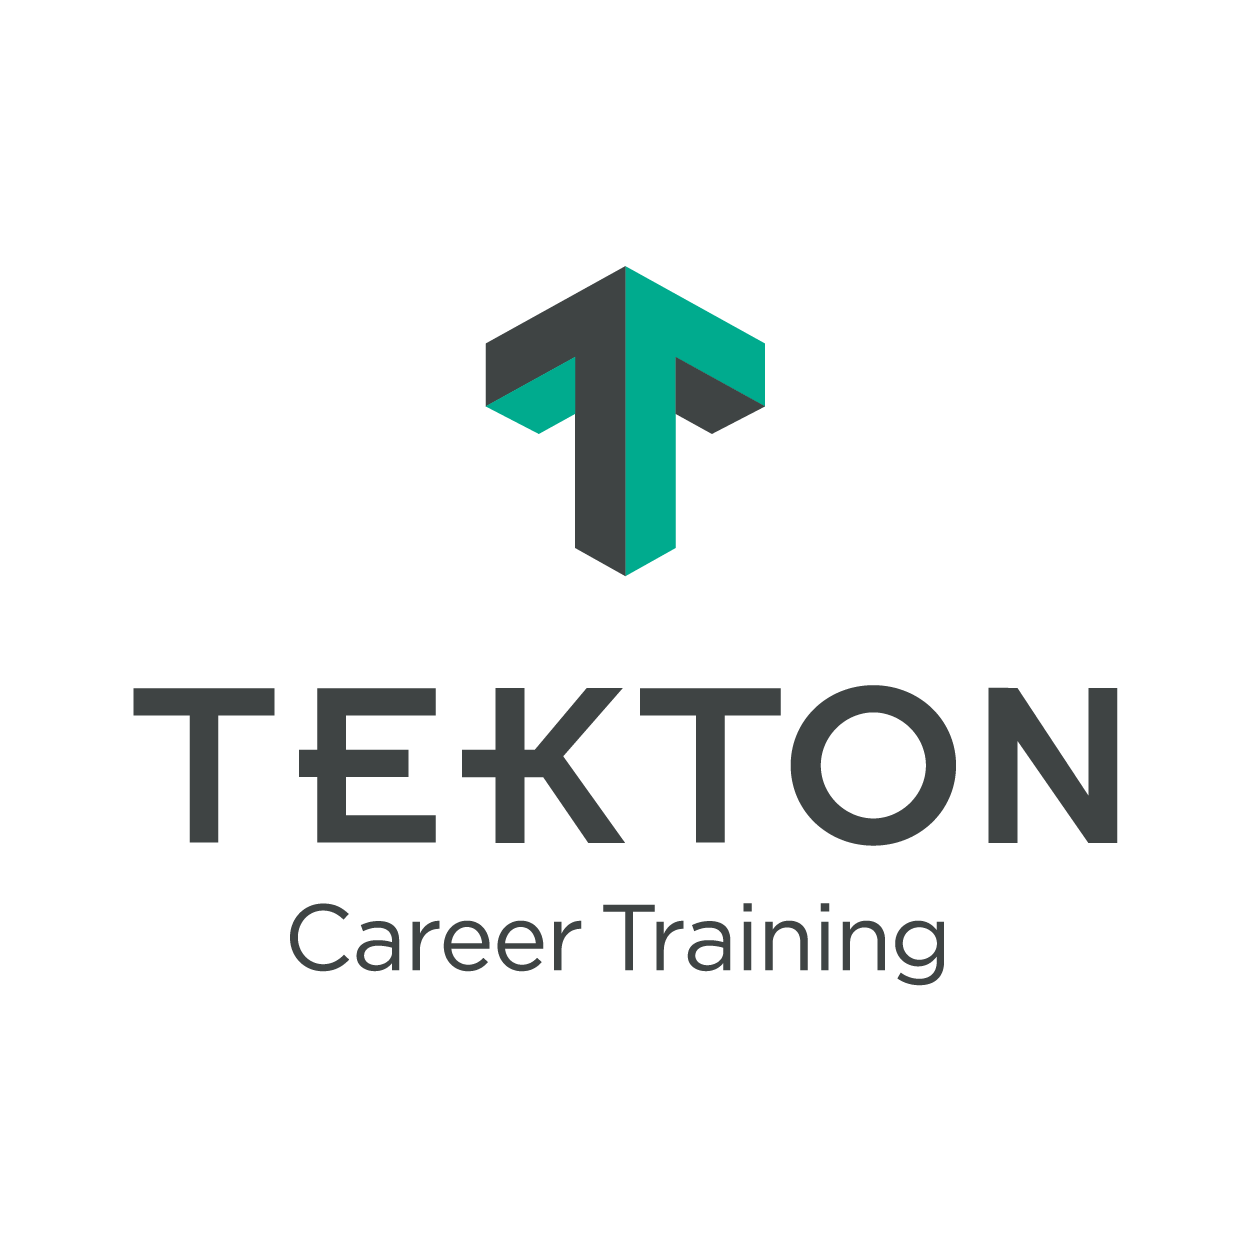 Tekton Career Training